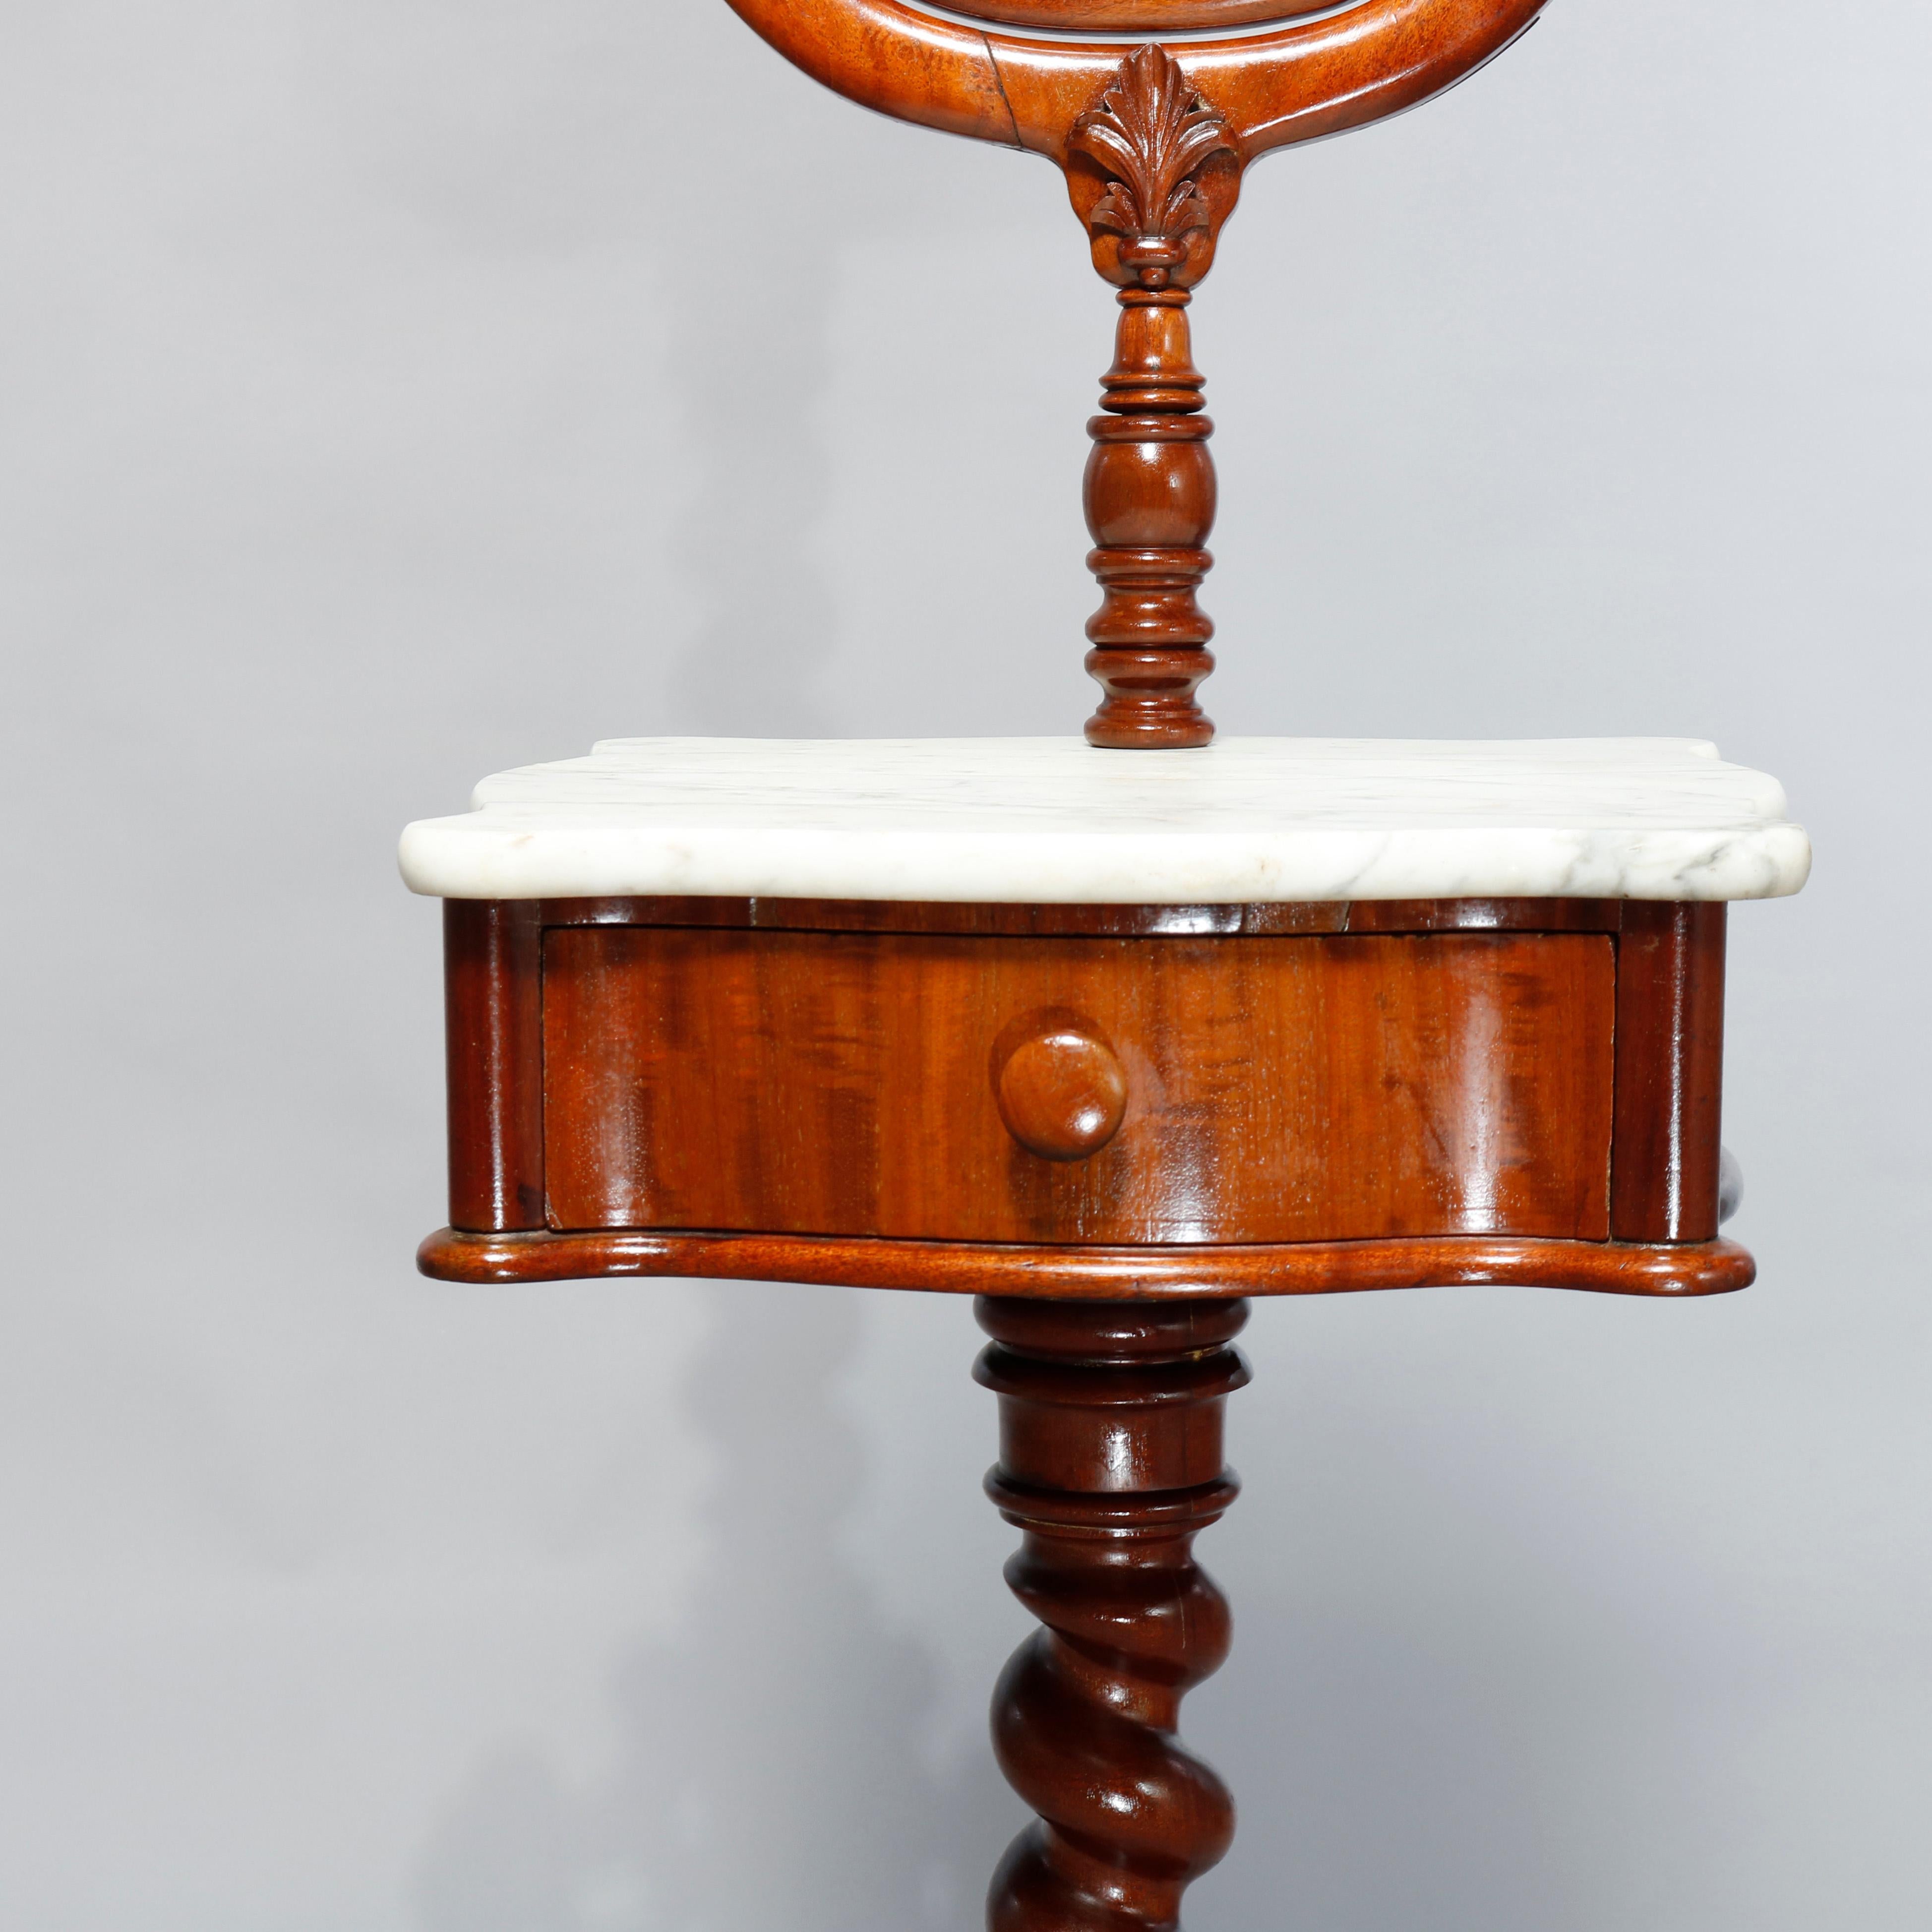 European Antique Victorian Rosewood Marble-Top Shaving Mirror Stand, Circa 1880